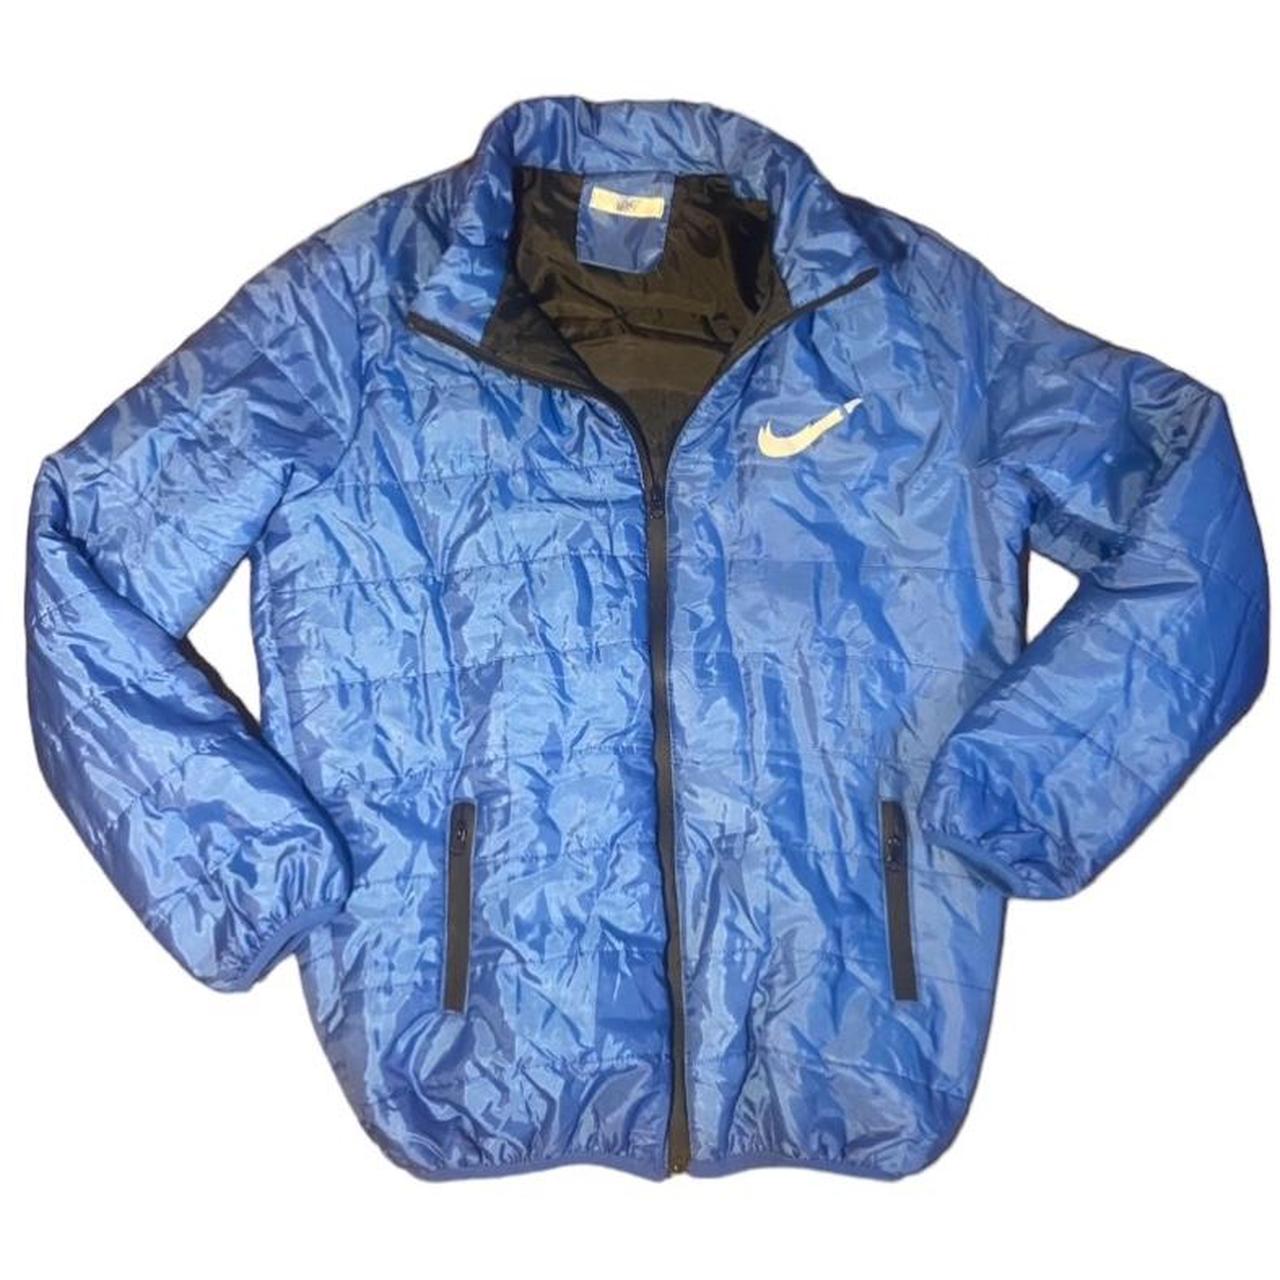 Nike Puffer Jacket Size Large #nike #puffer - Depop